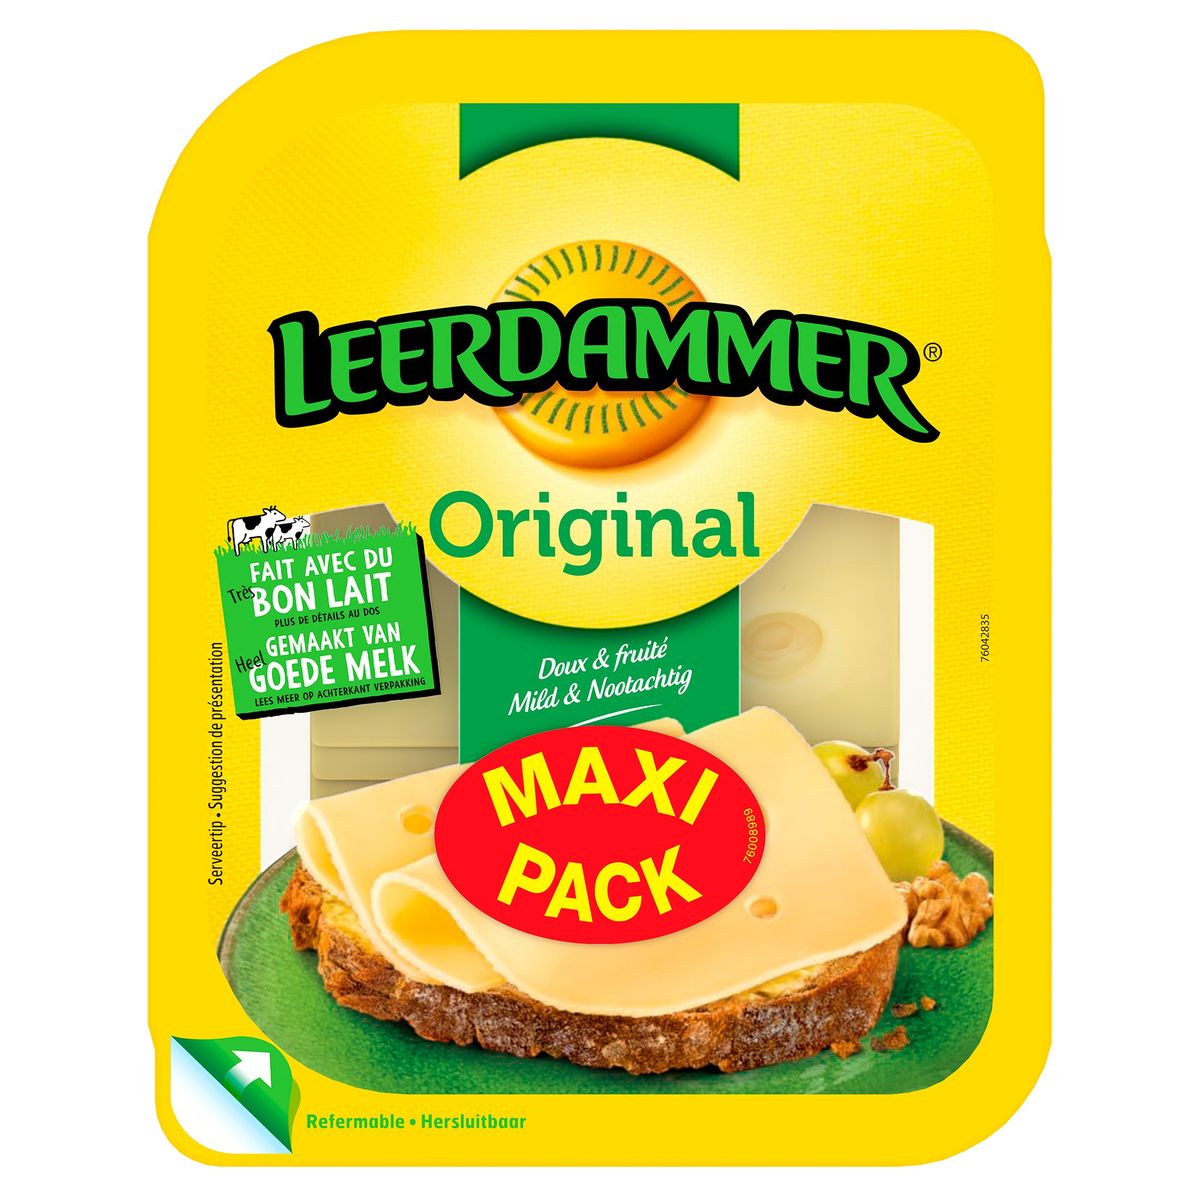 Leerdammer Original Maxi Pack 350 g